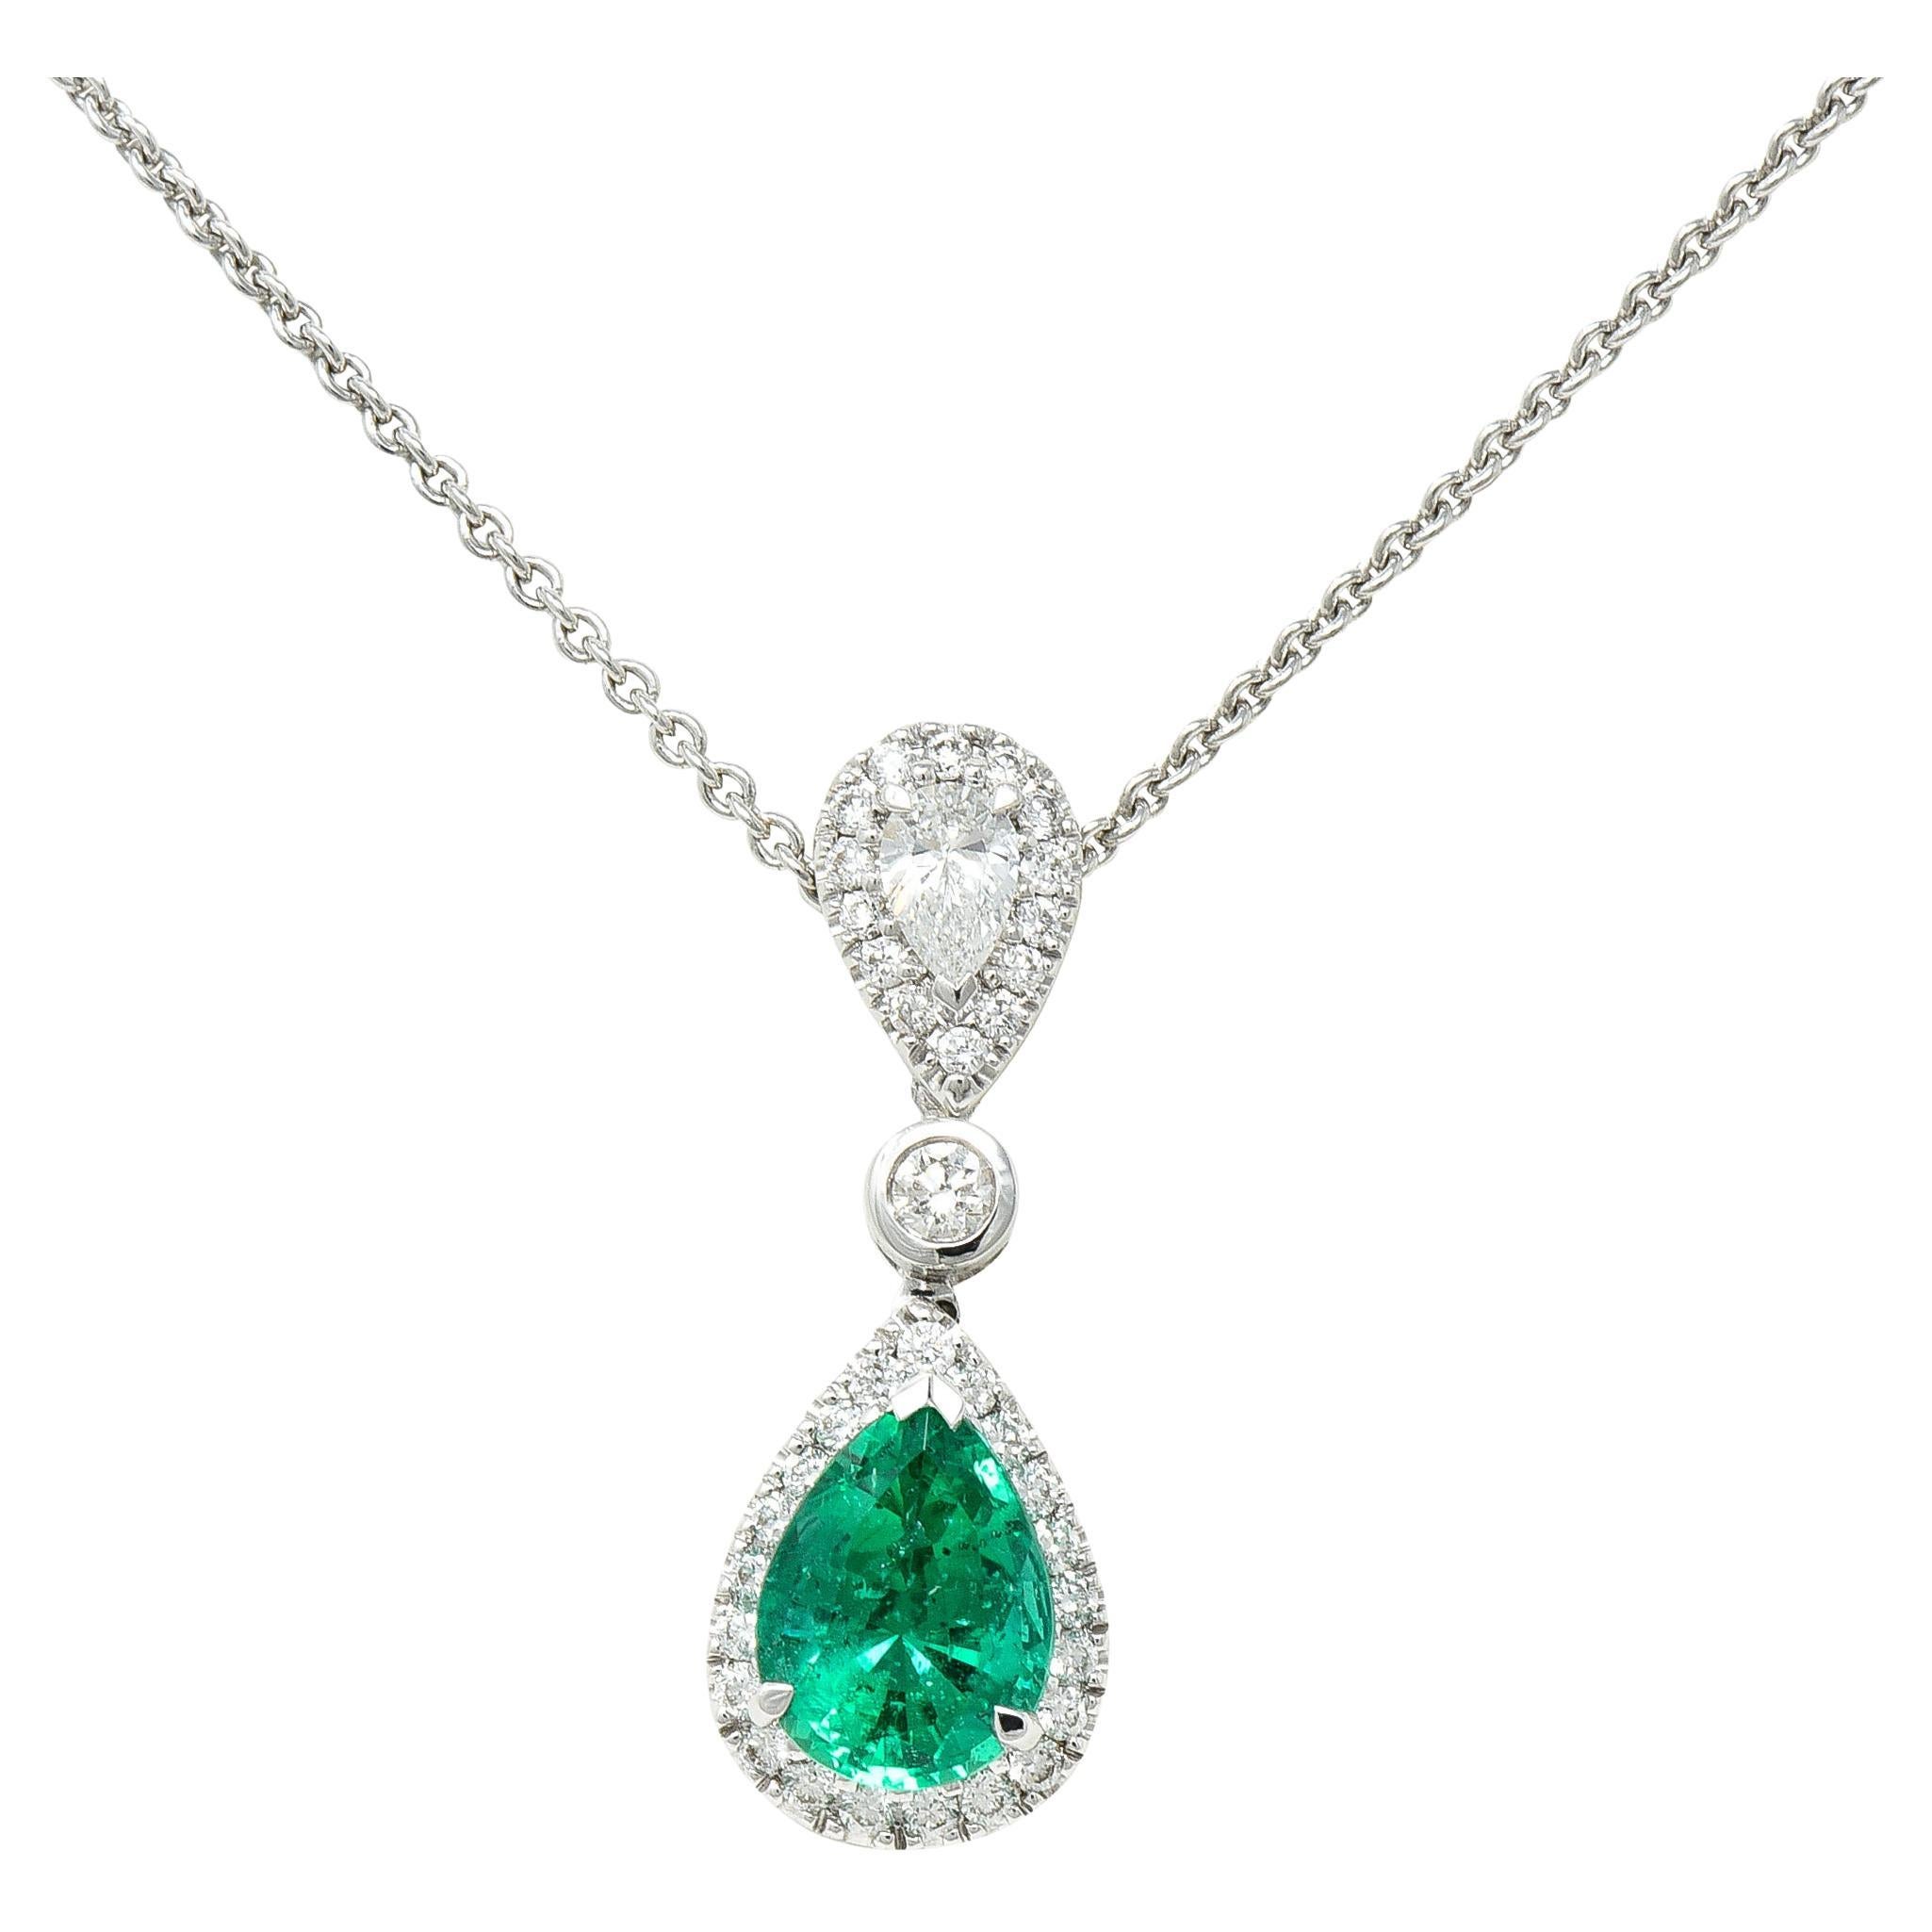 Contemporary 1.35 Carats Pear Cut Emerald Diamond 18 Karat White Gold Necklace